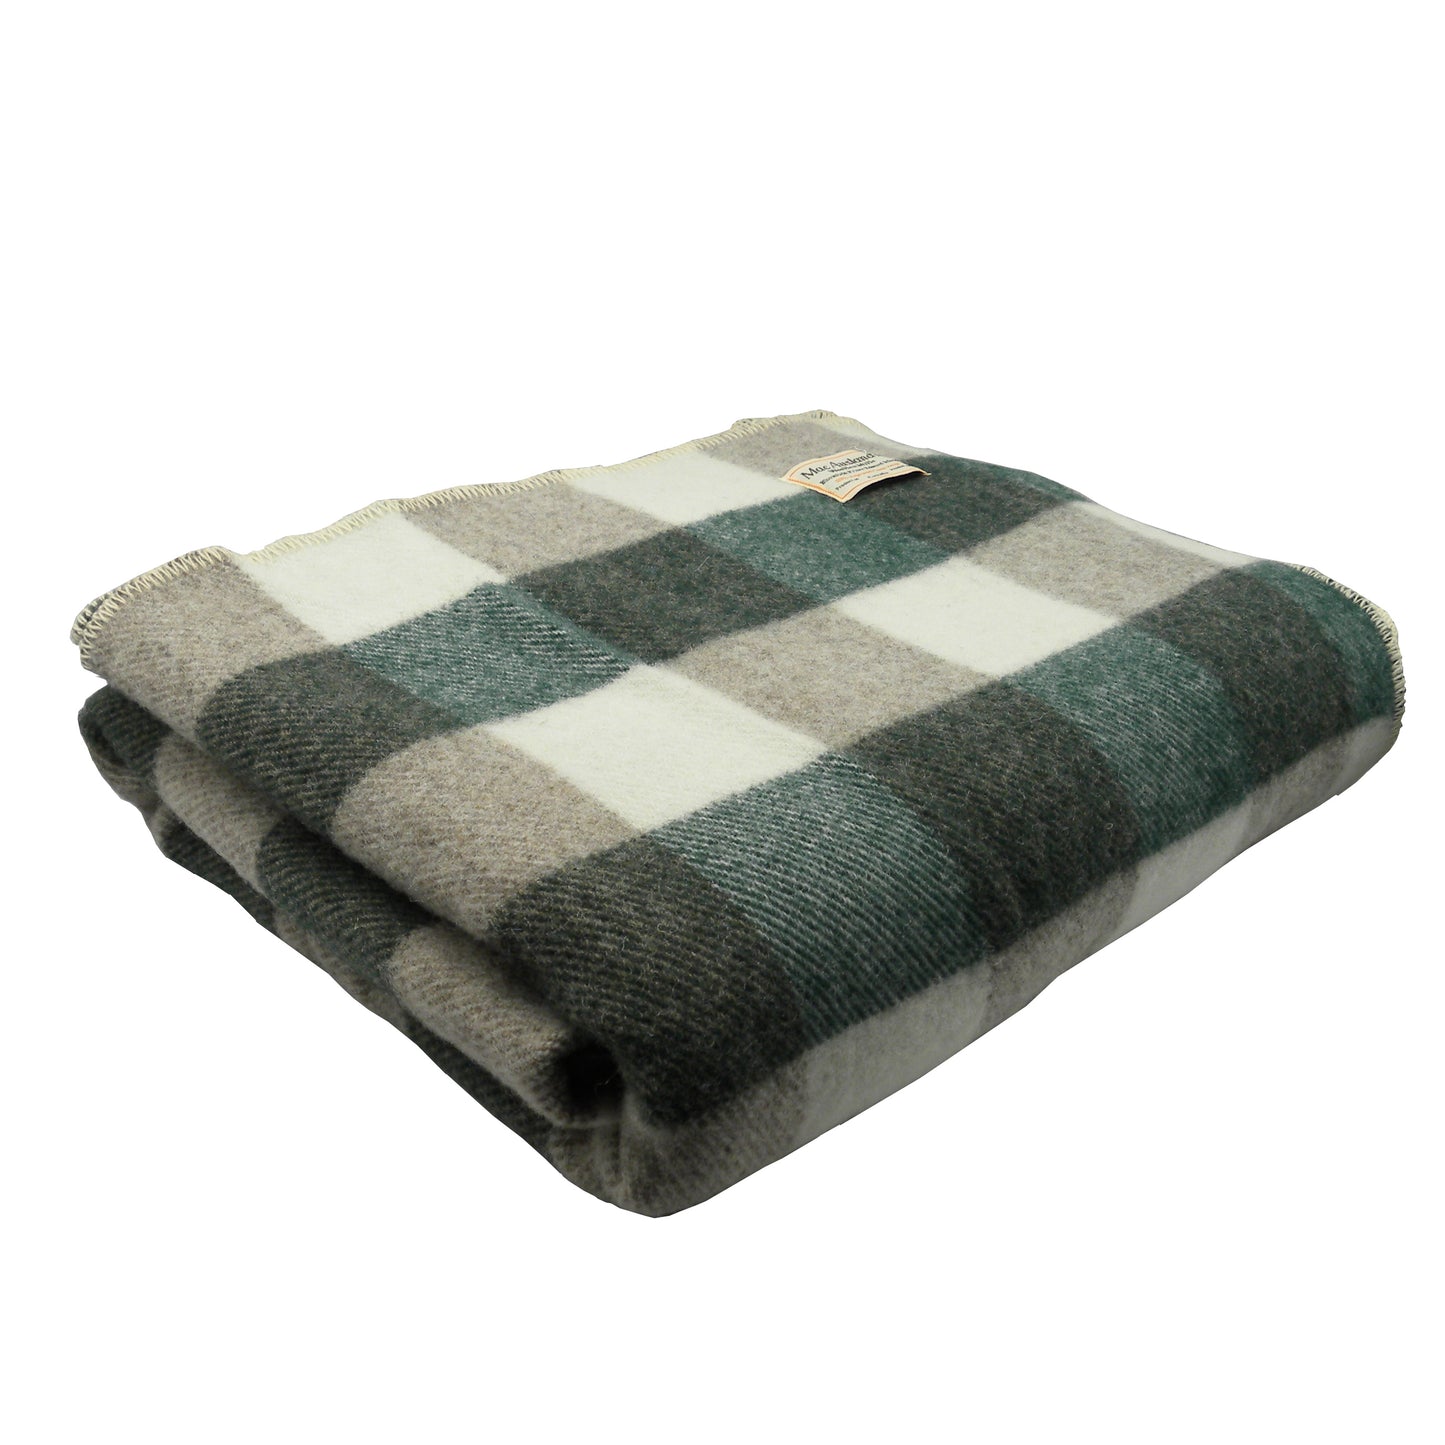 MacAusland's Checkerboard Wool Blanket